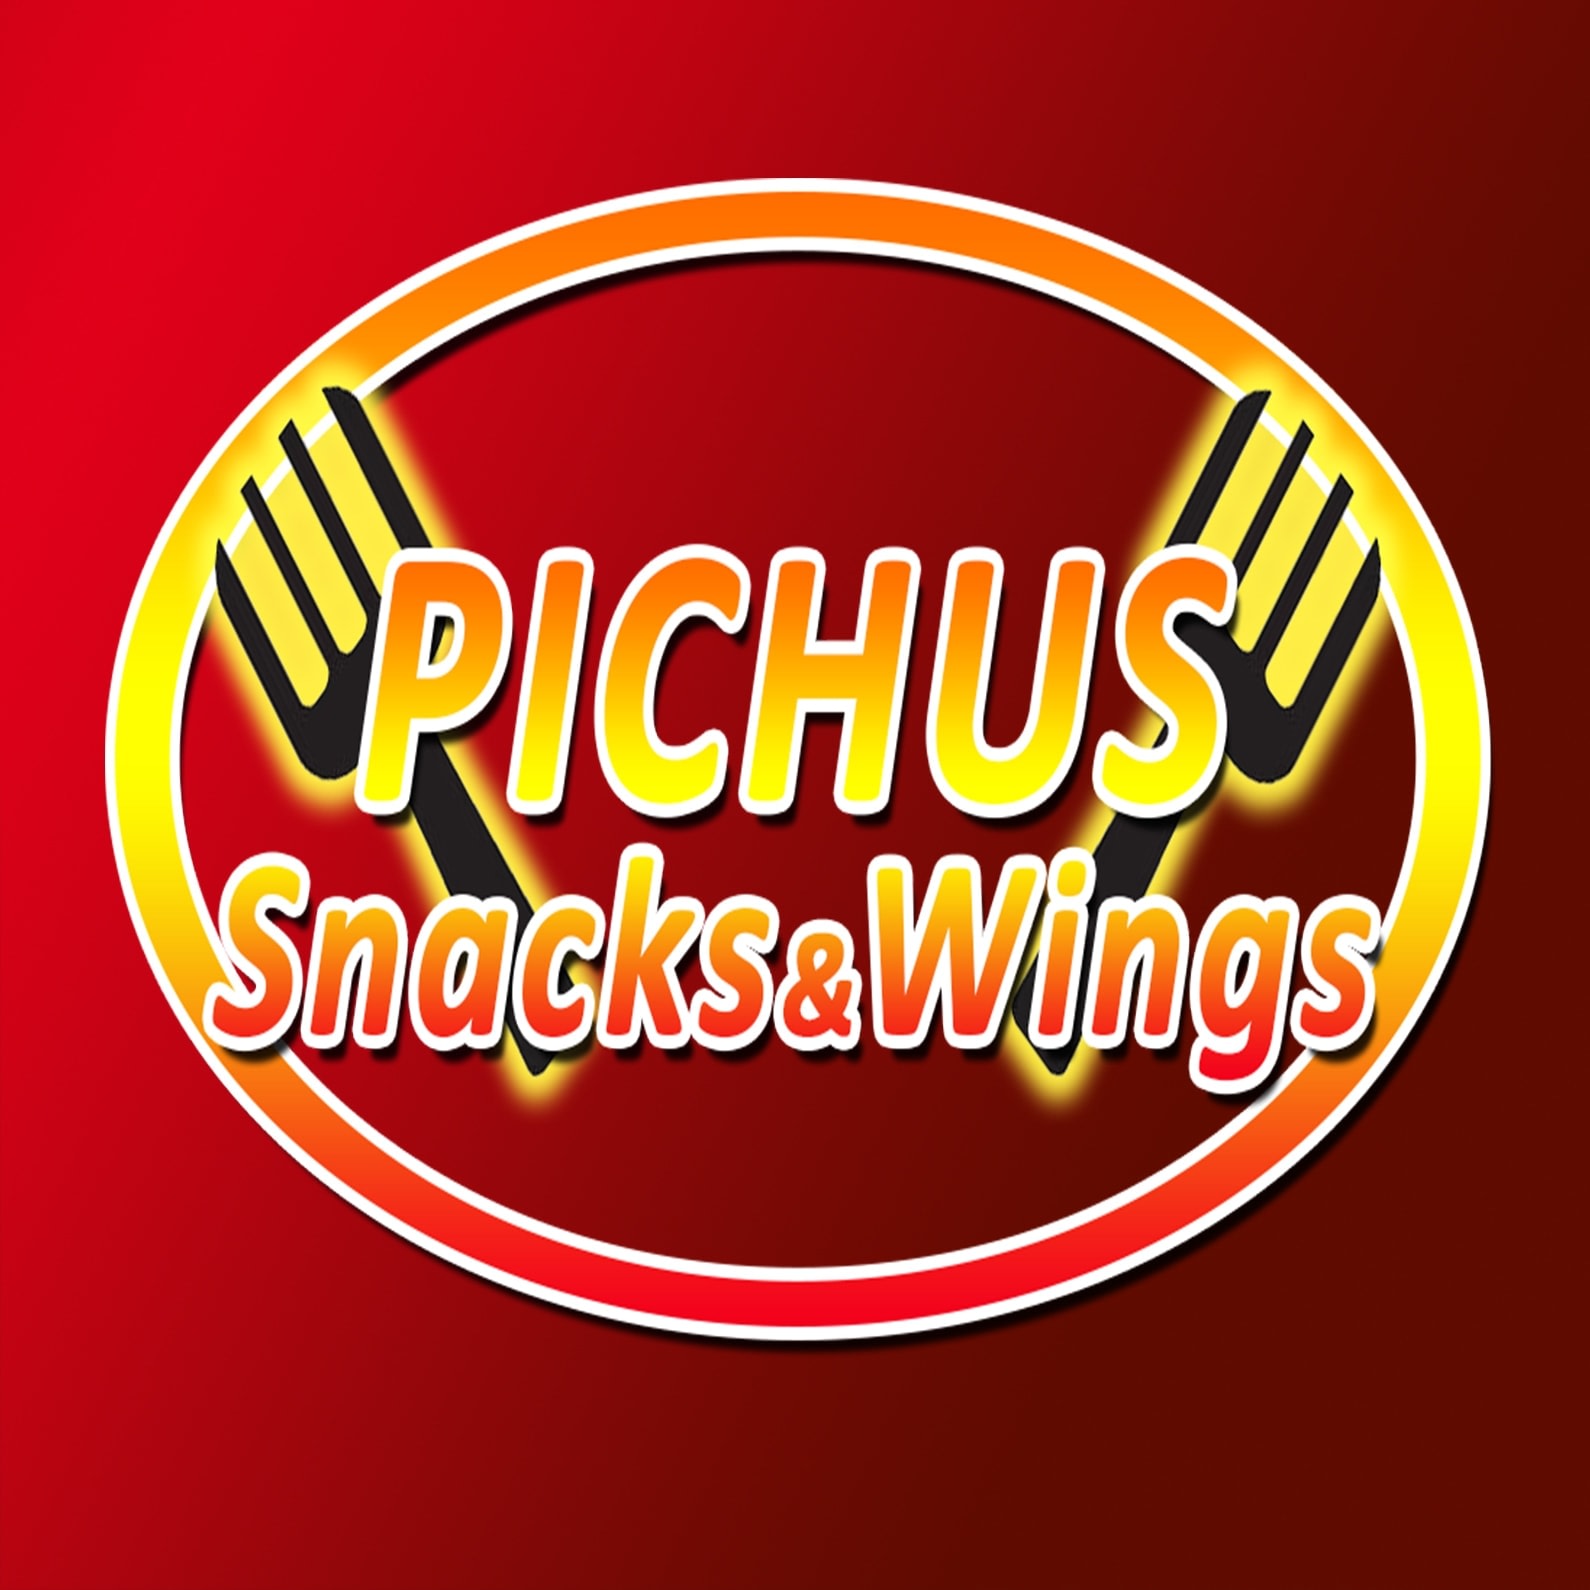 Pichus Snacks